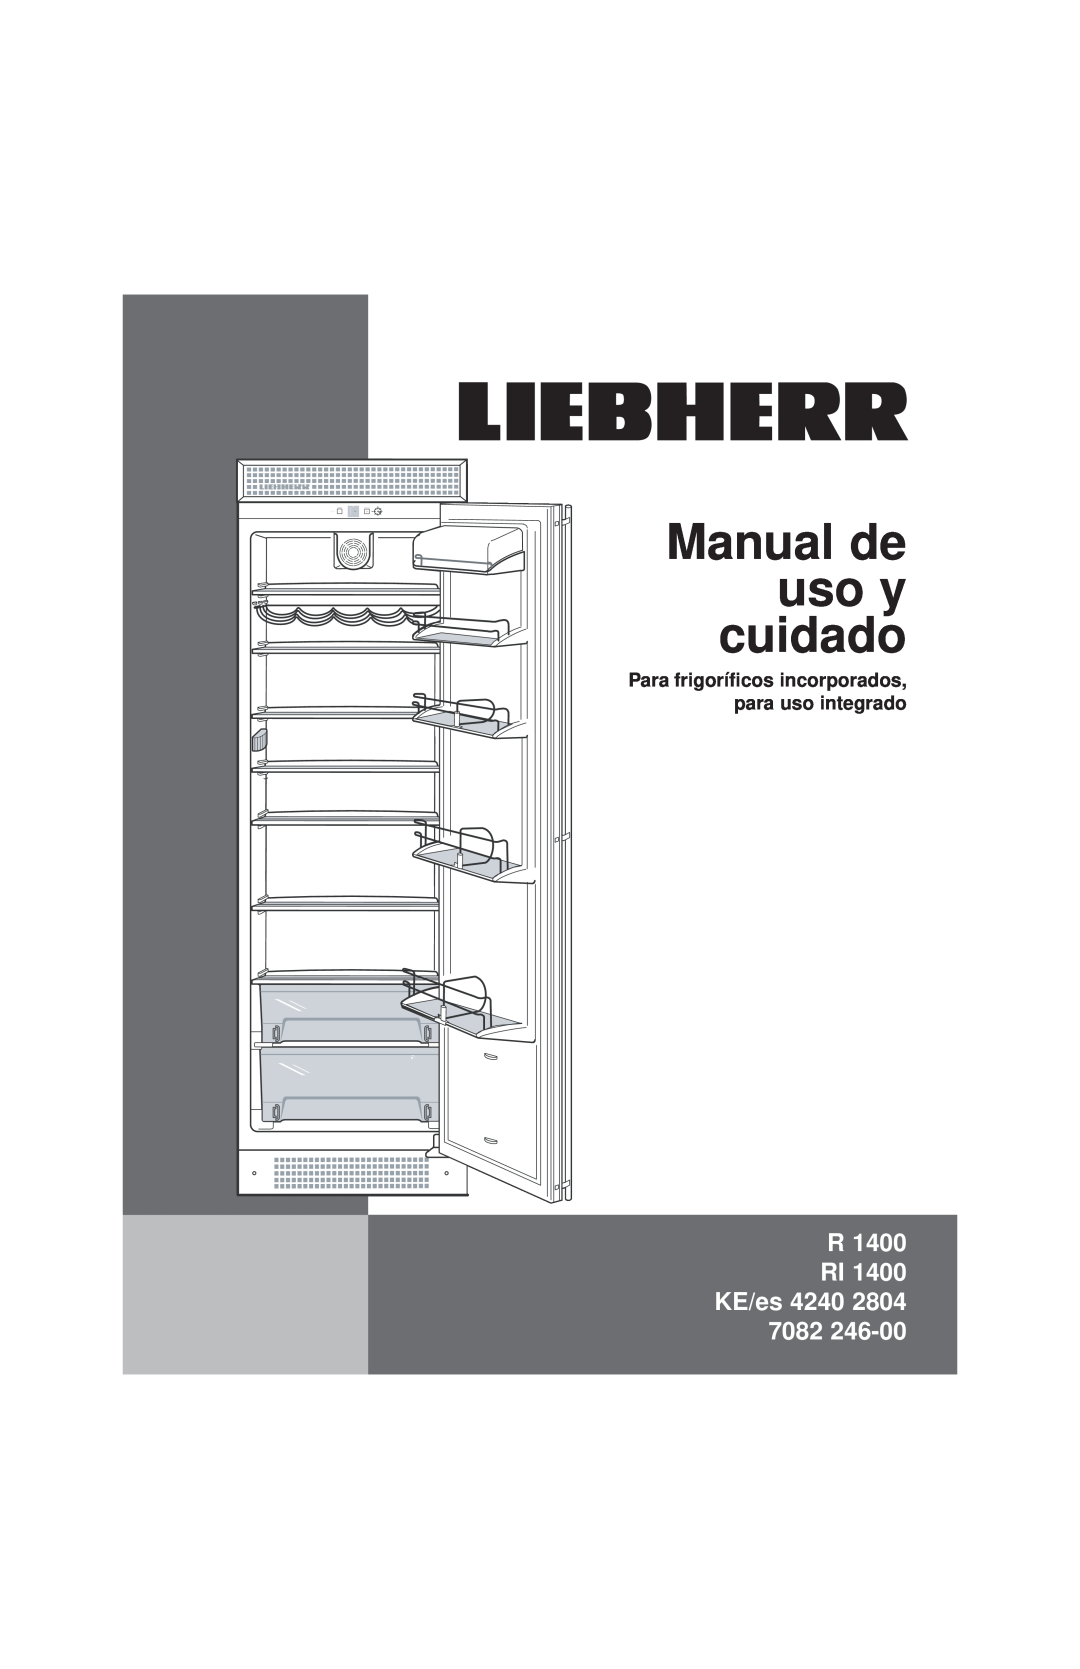 Liebherr RI1400, KE/ES 4240 2804, R1400, 7082 246-00 manuel dutilisation Manual de uso y cuidado, R RI 1400 KE/es 